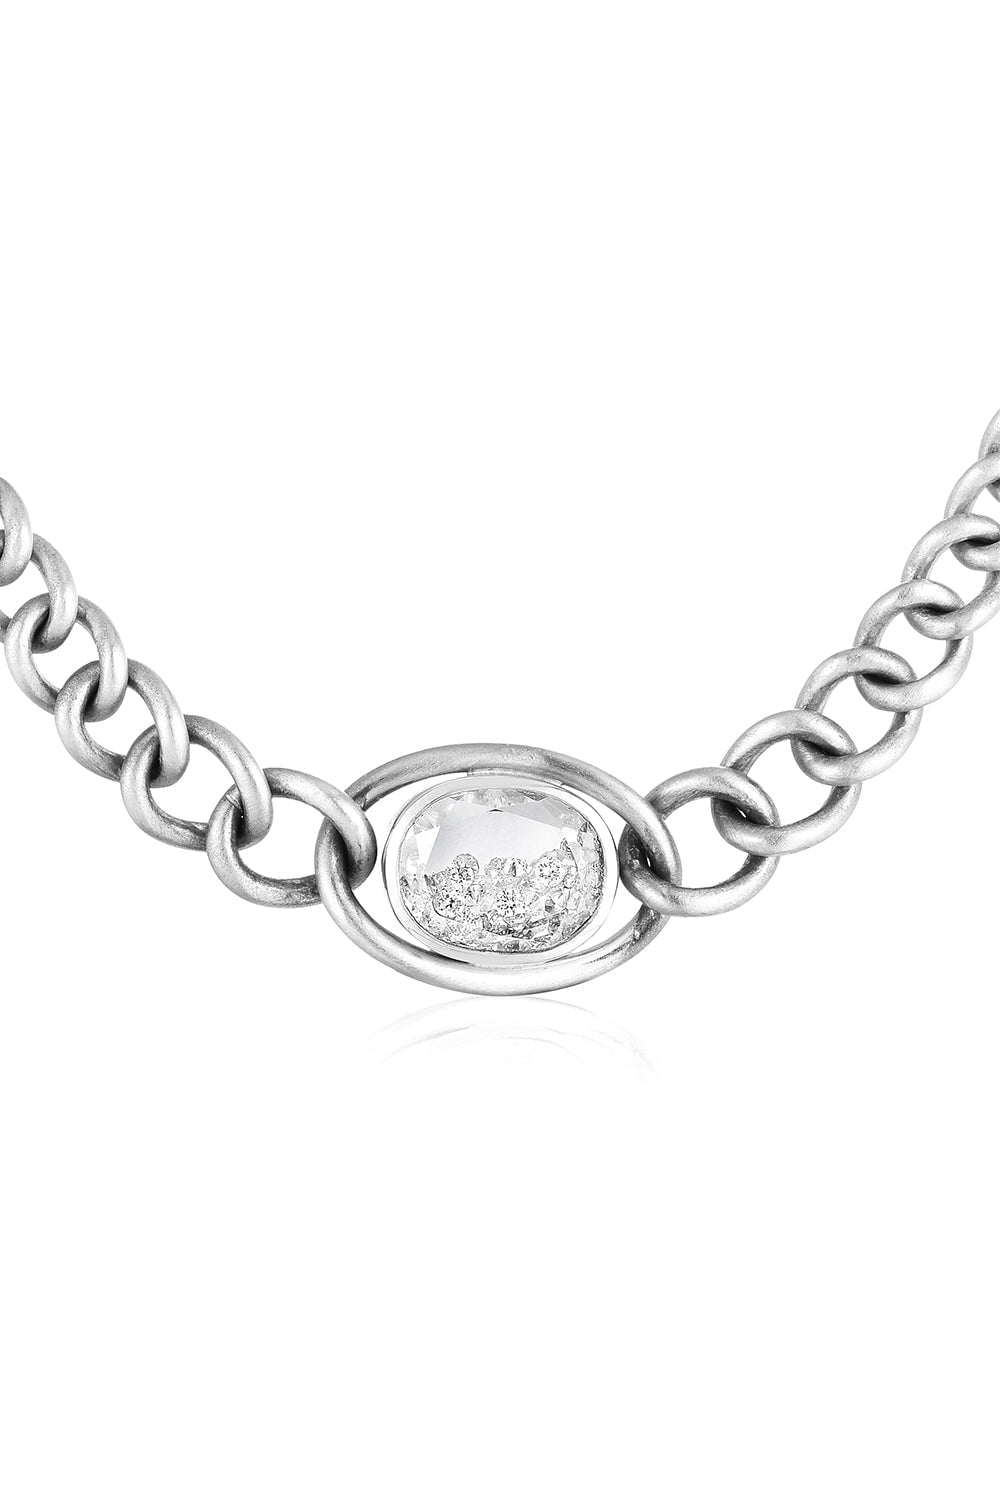 MORITZ GLIK-Cravo Curb Chain Necklace-WHITE GOLD